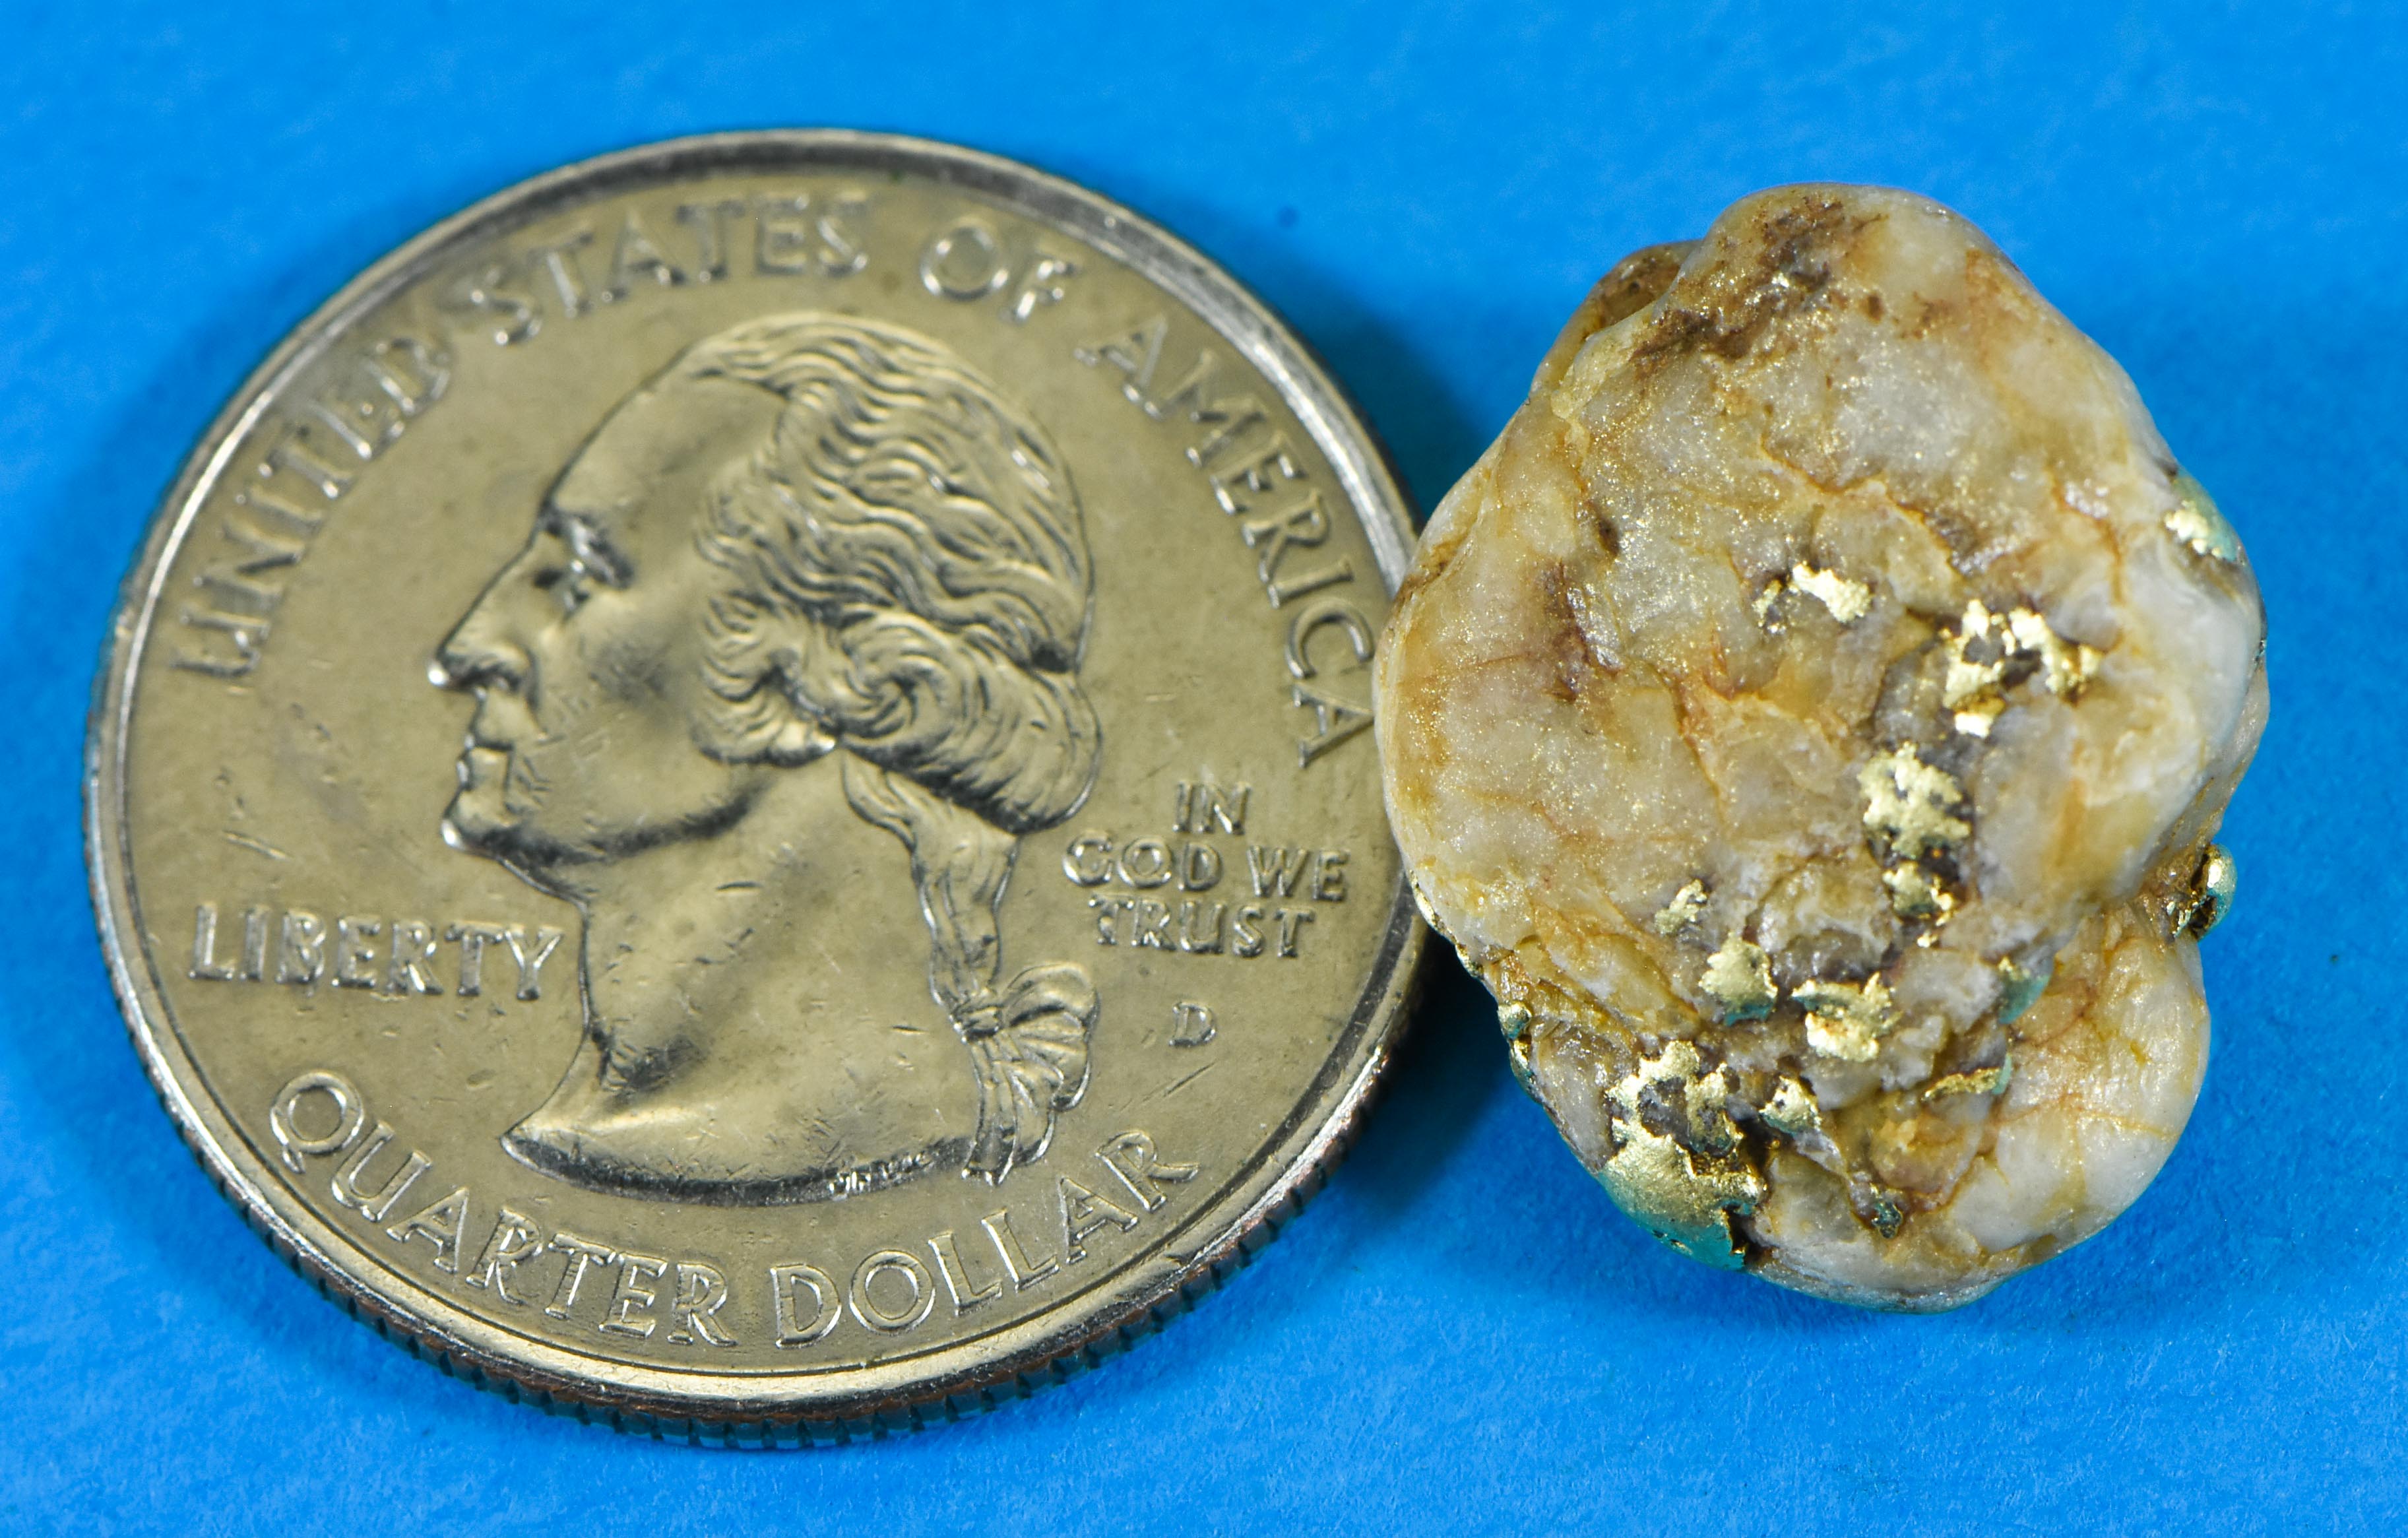 QN-35 "Alaskan BC Gold Nuggets with Quartz" - Genuine - 5.44 Grams